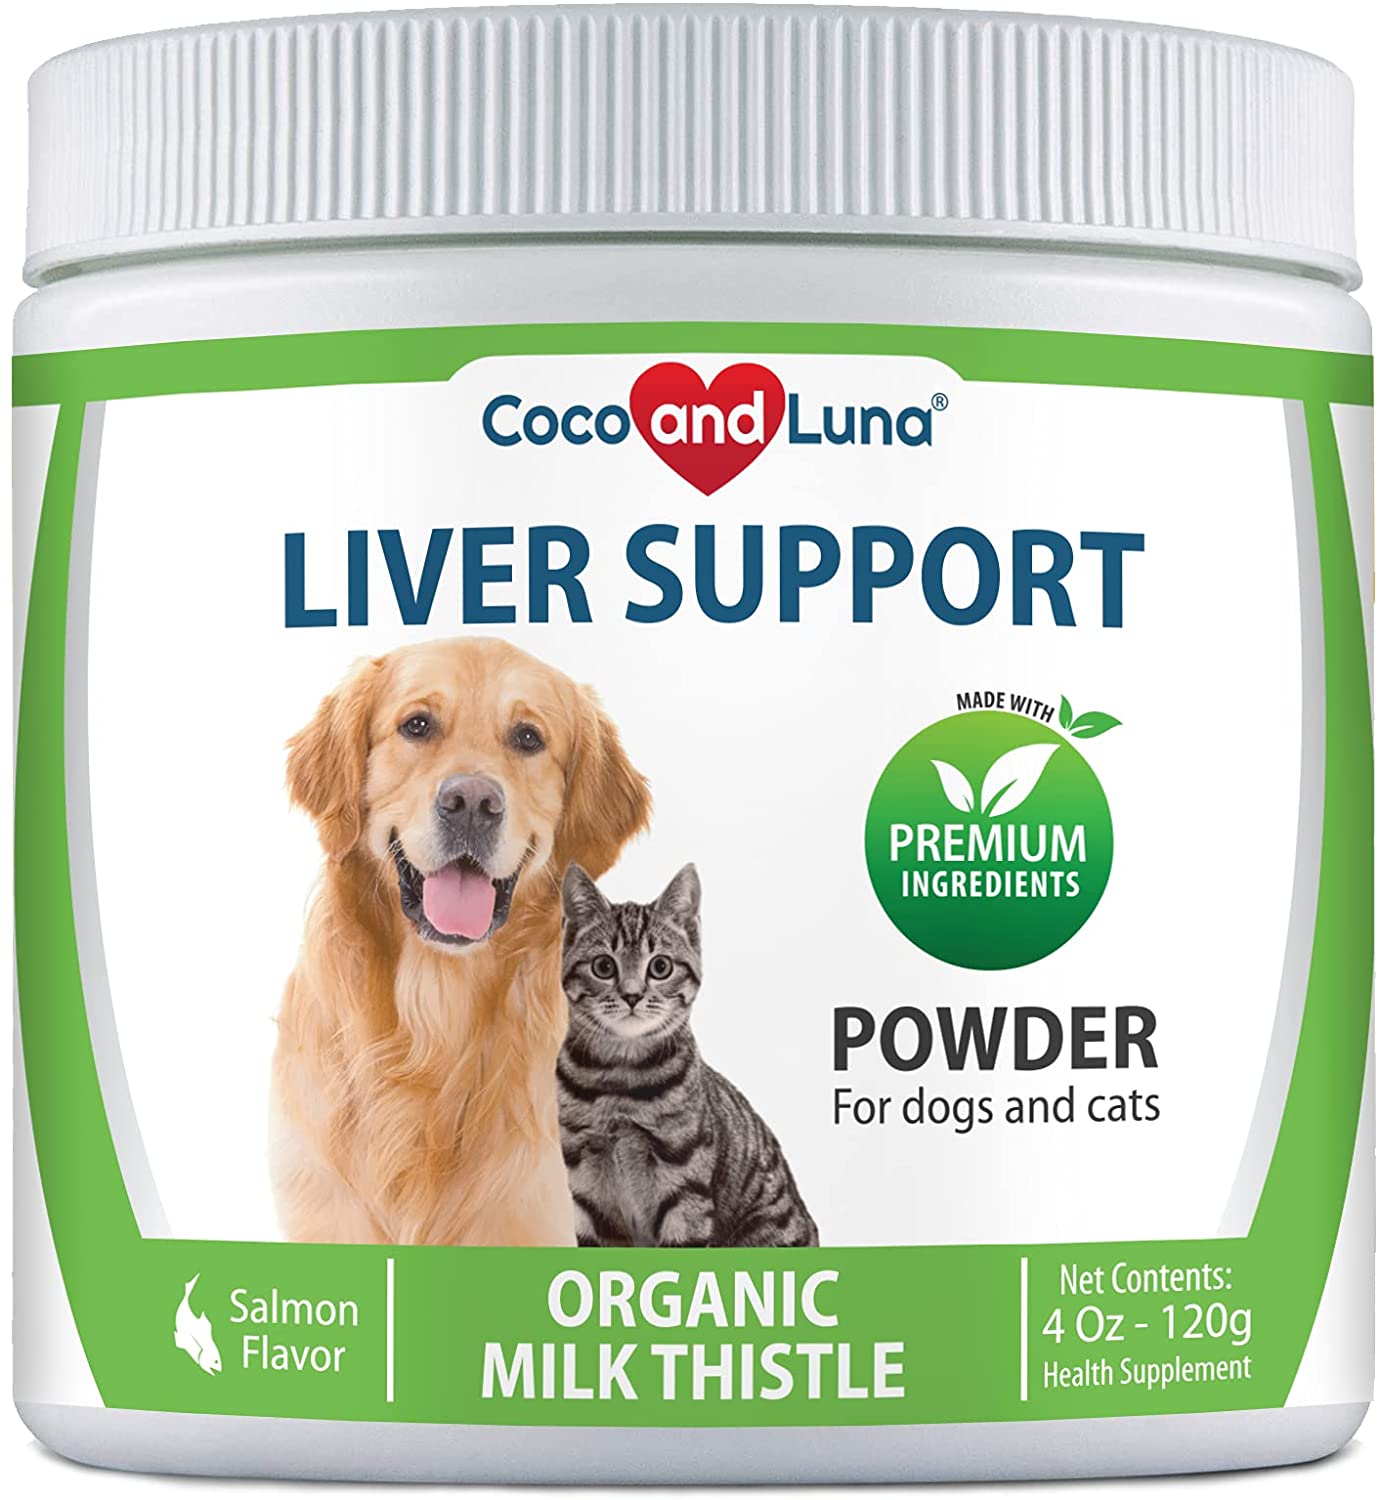 Coco and Luna Milk Thistle Liver Support Powder